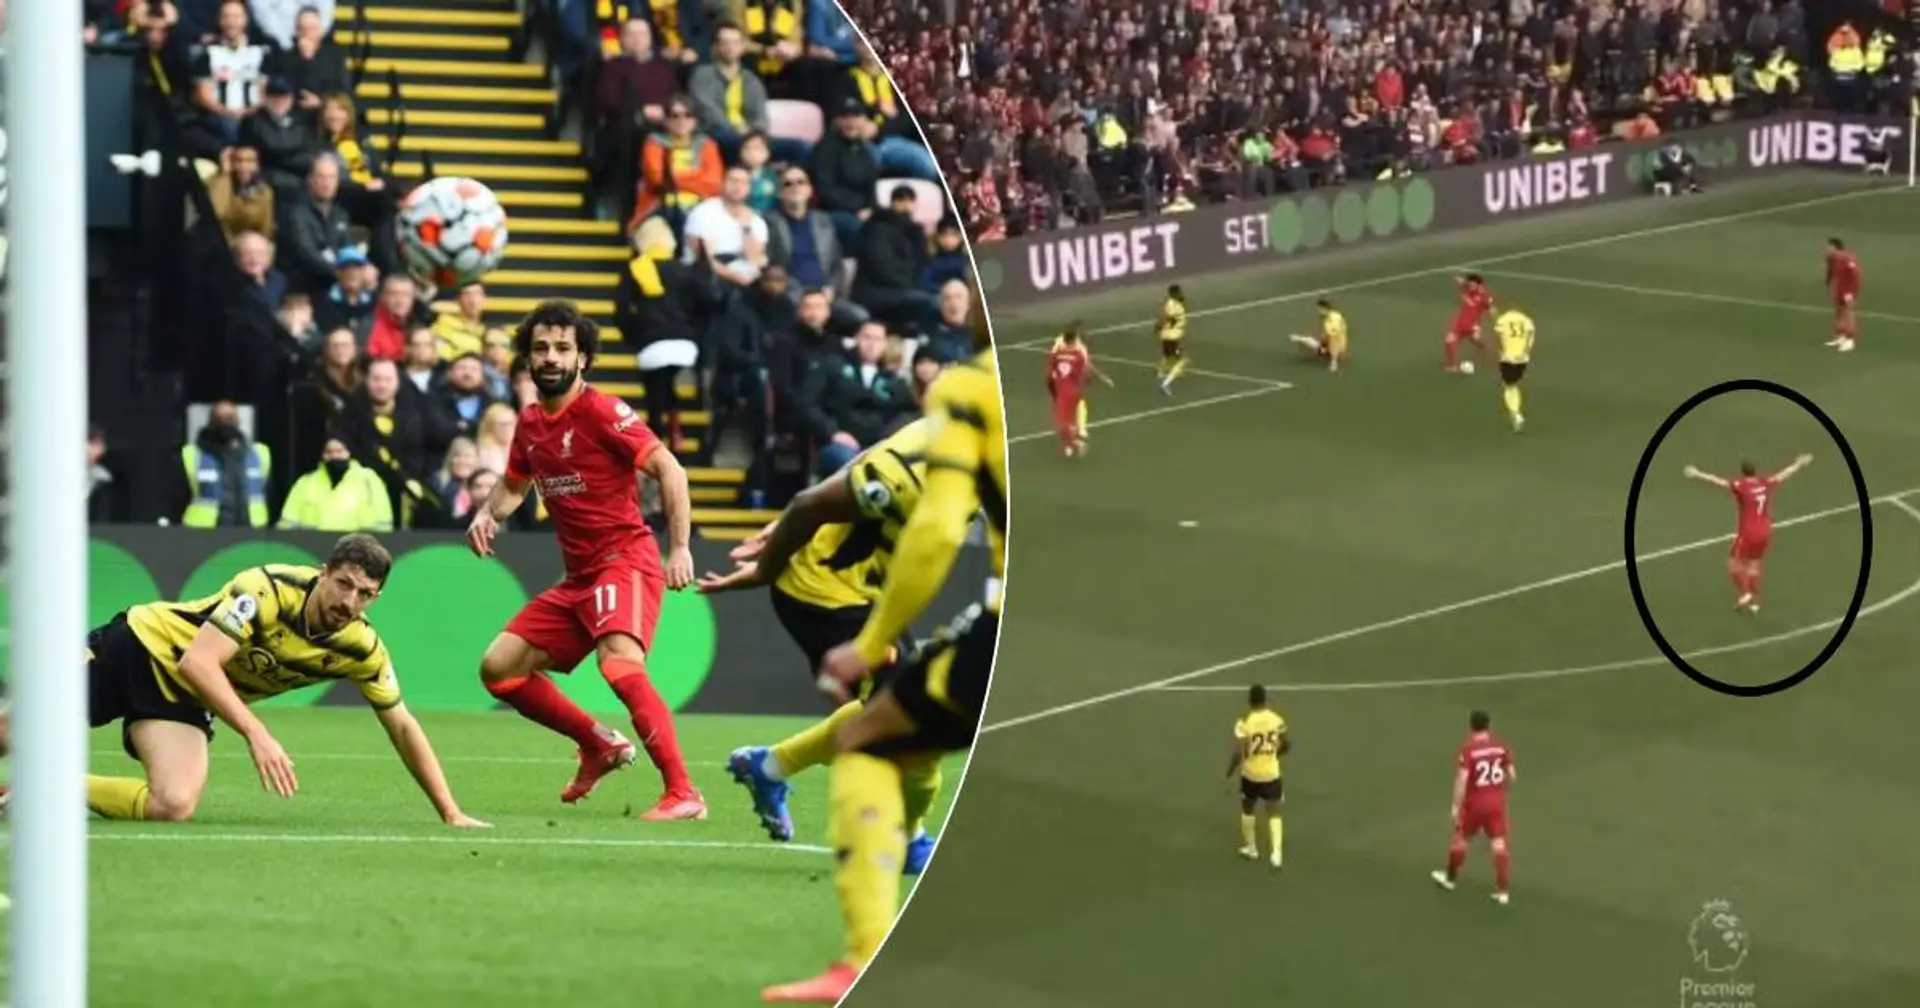 Spotted: Milner's epic reaction just before Salah's wonder goal against Watford